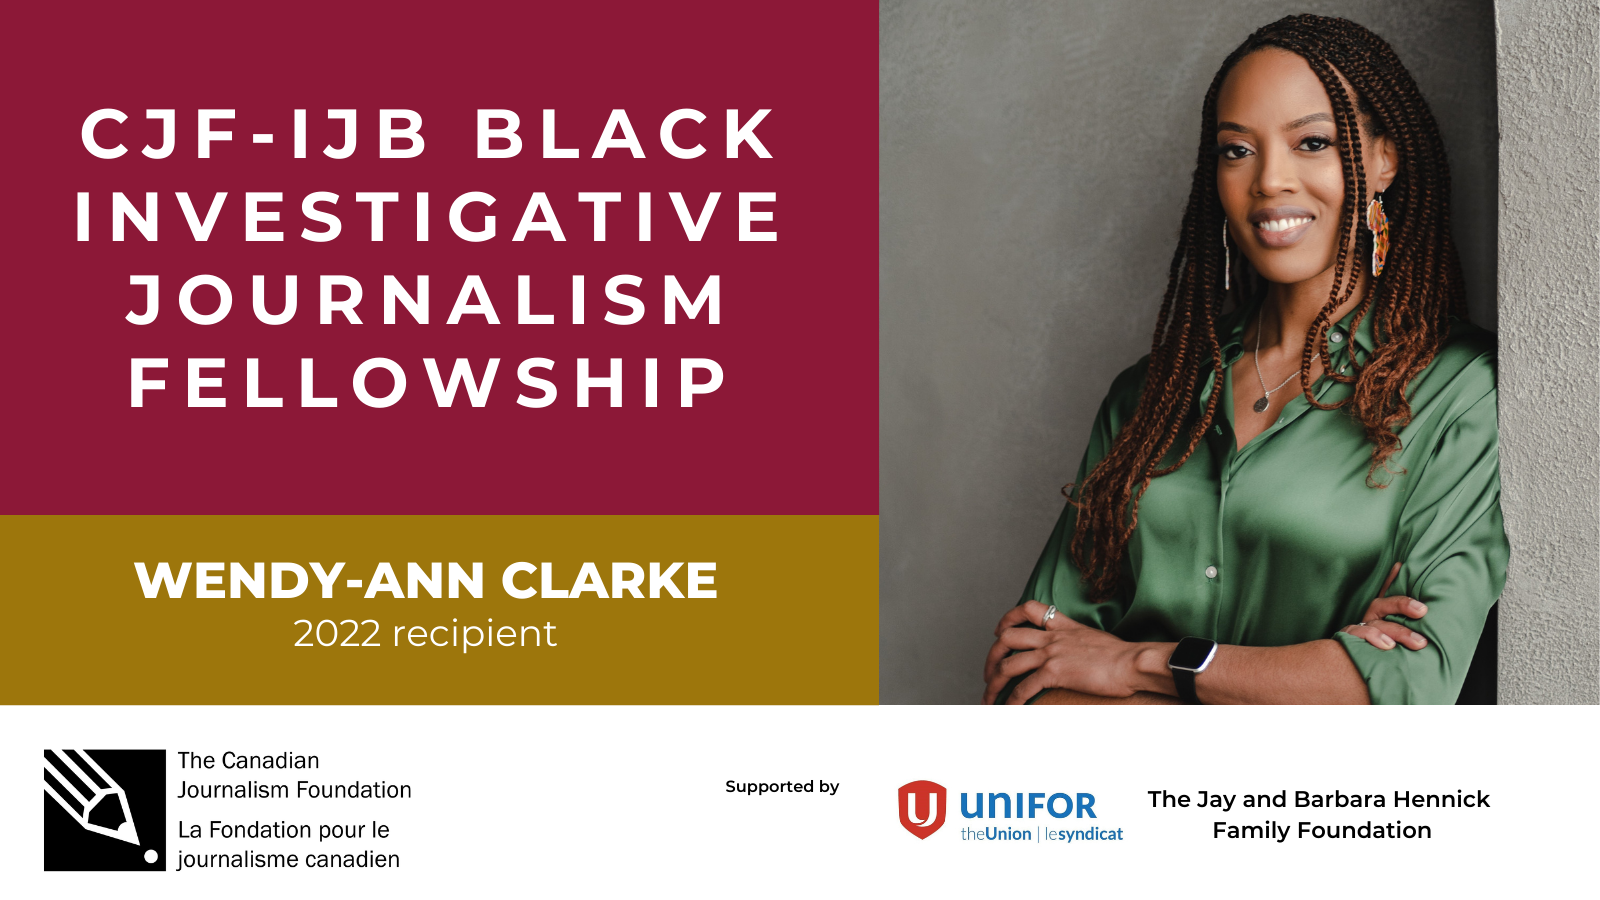 CJF-IJB Black Investigative Journalism Fellowship. Wendy-Ann Clarke, 2022 recipient. With photo of Wendy-Ann Clarke, a Black woman with braids, wearing a green collared shirt.